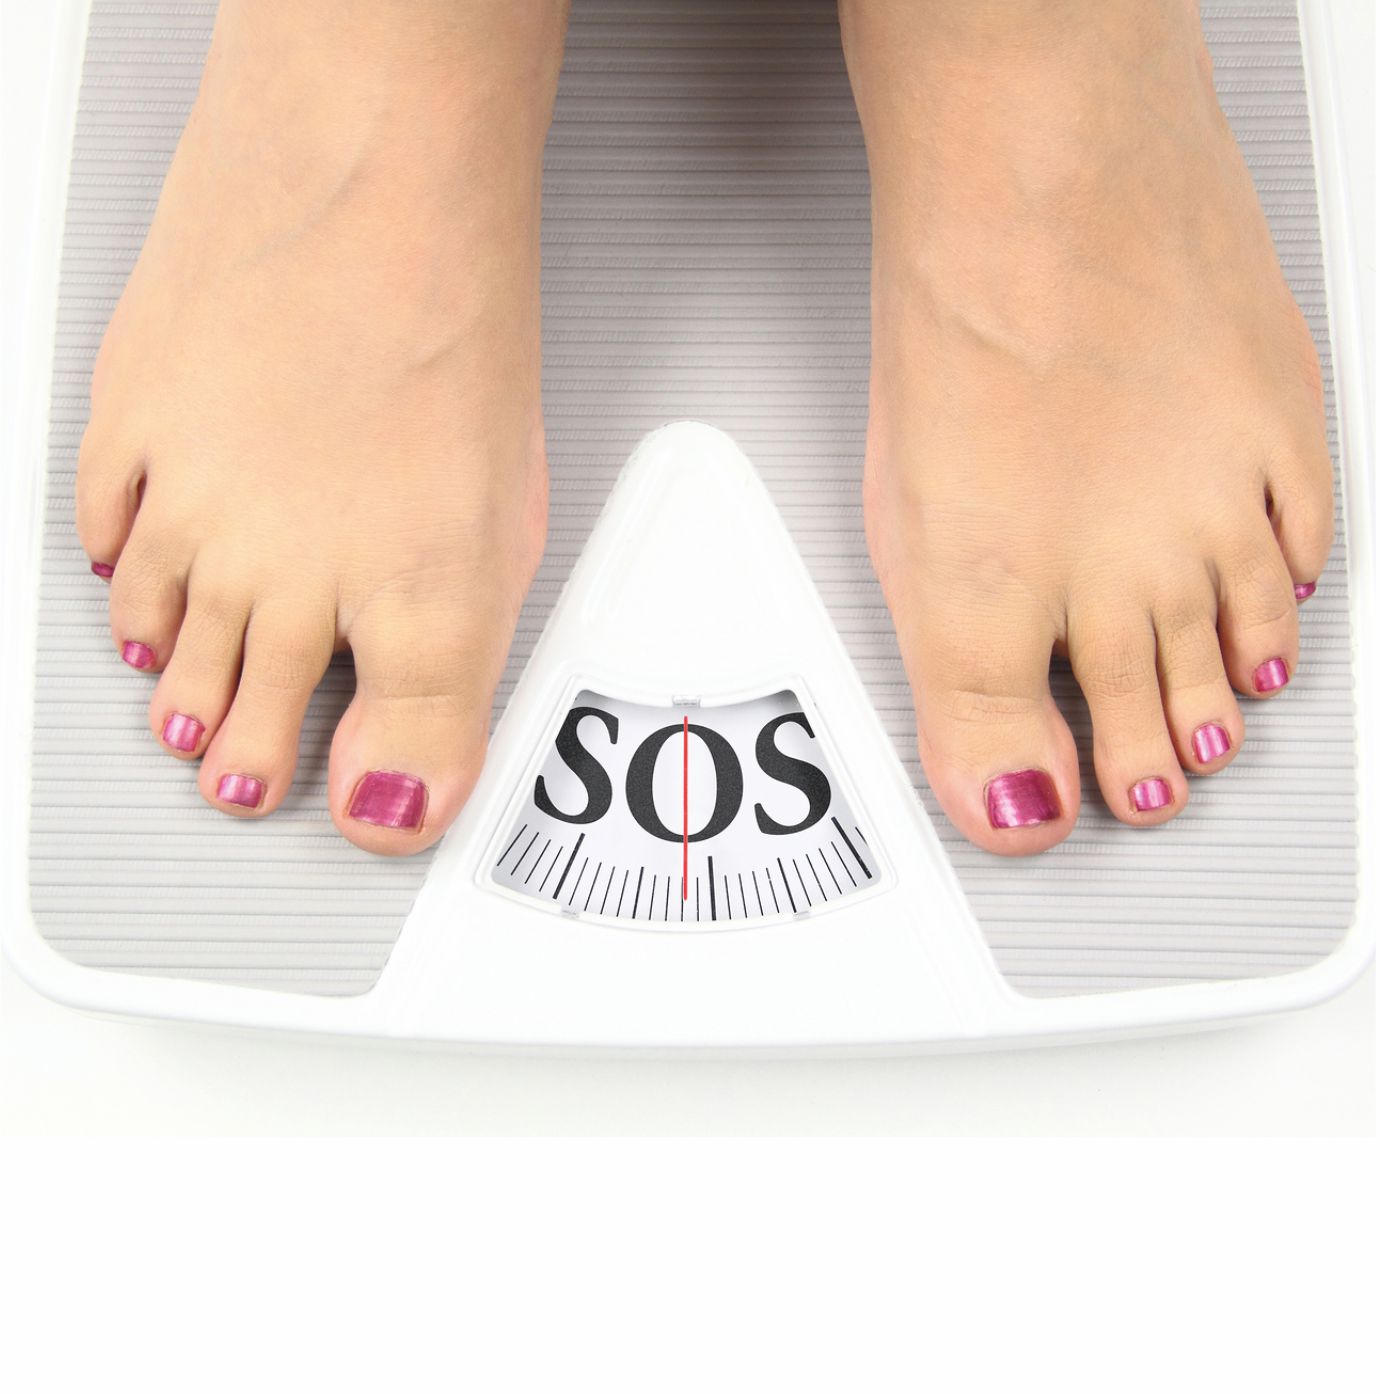 Программа обследования "Лишний вес"